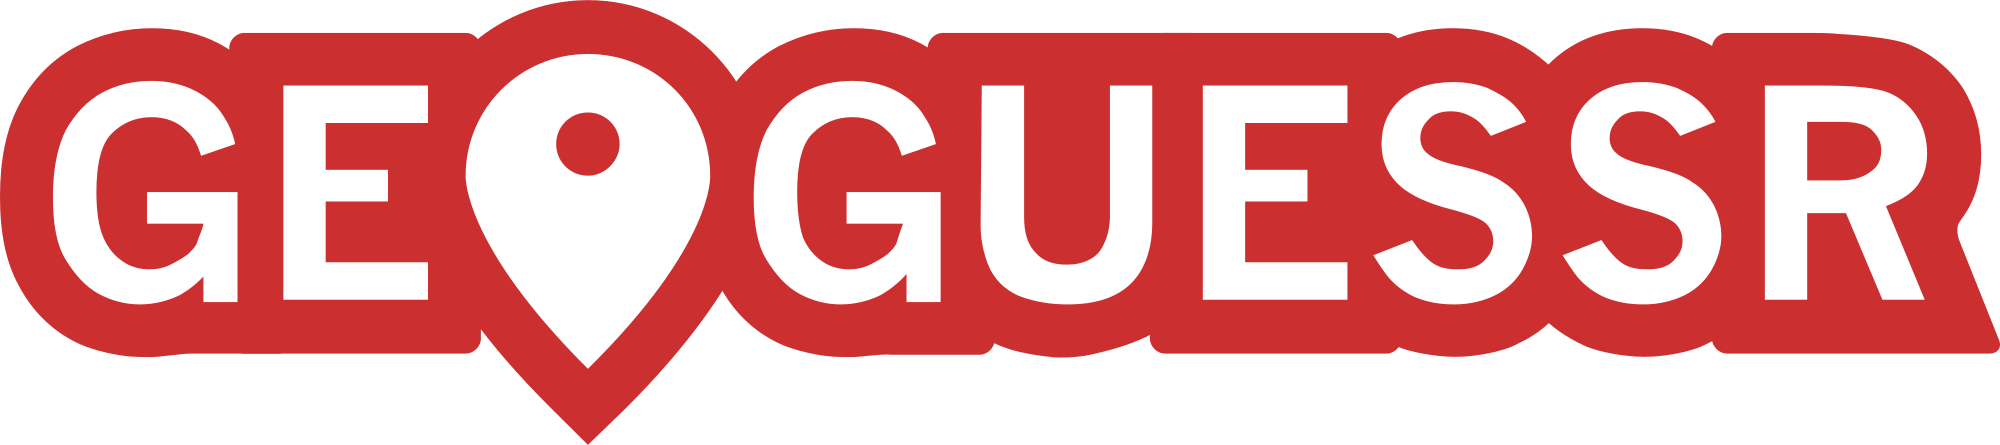 GeoGuessr logo